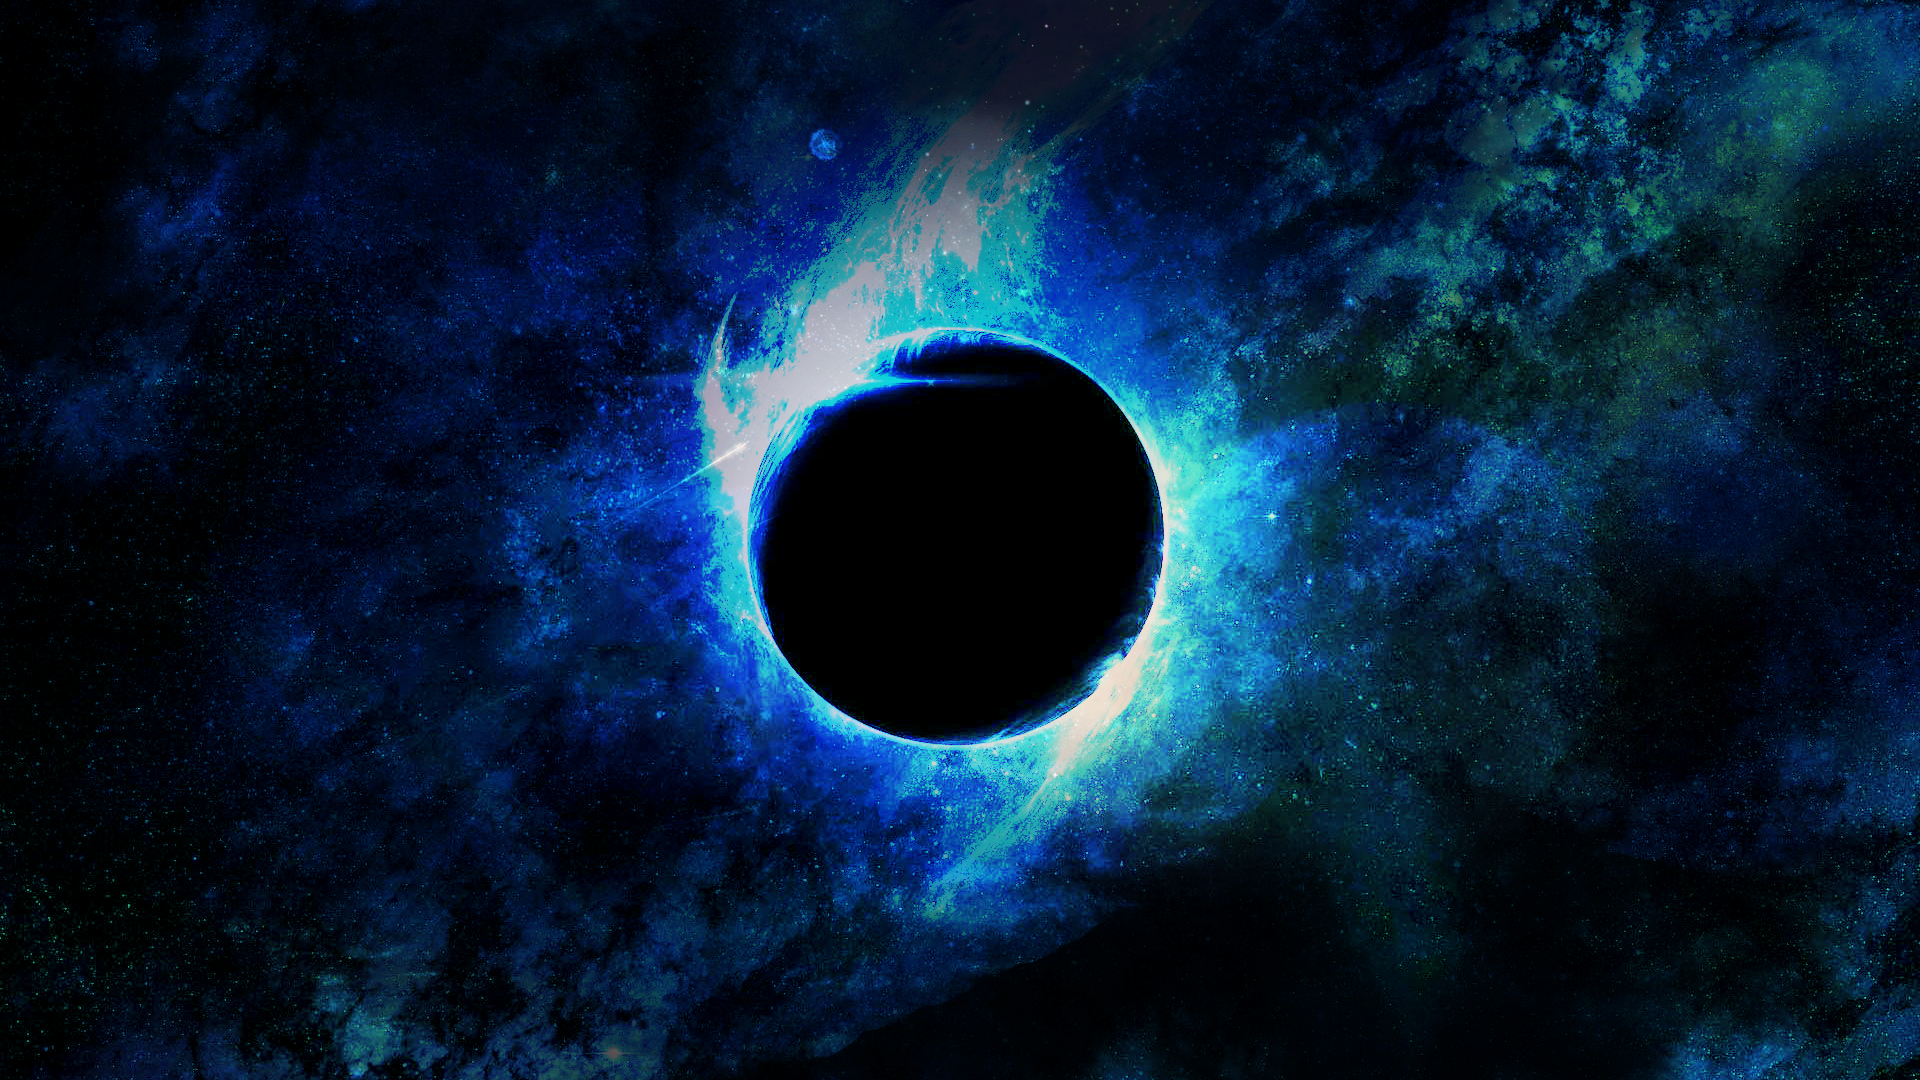 Background: Blue Black Hole (F2U) by RandomnessRandom on DeviantArt